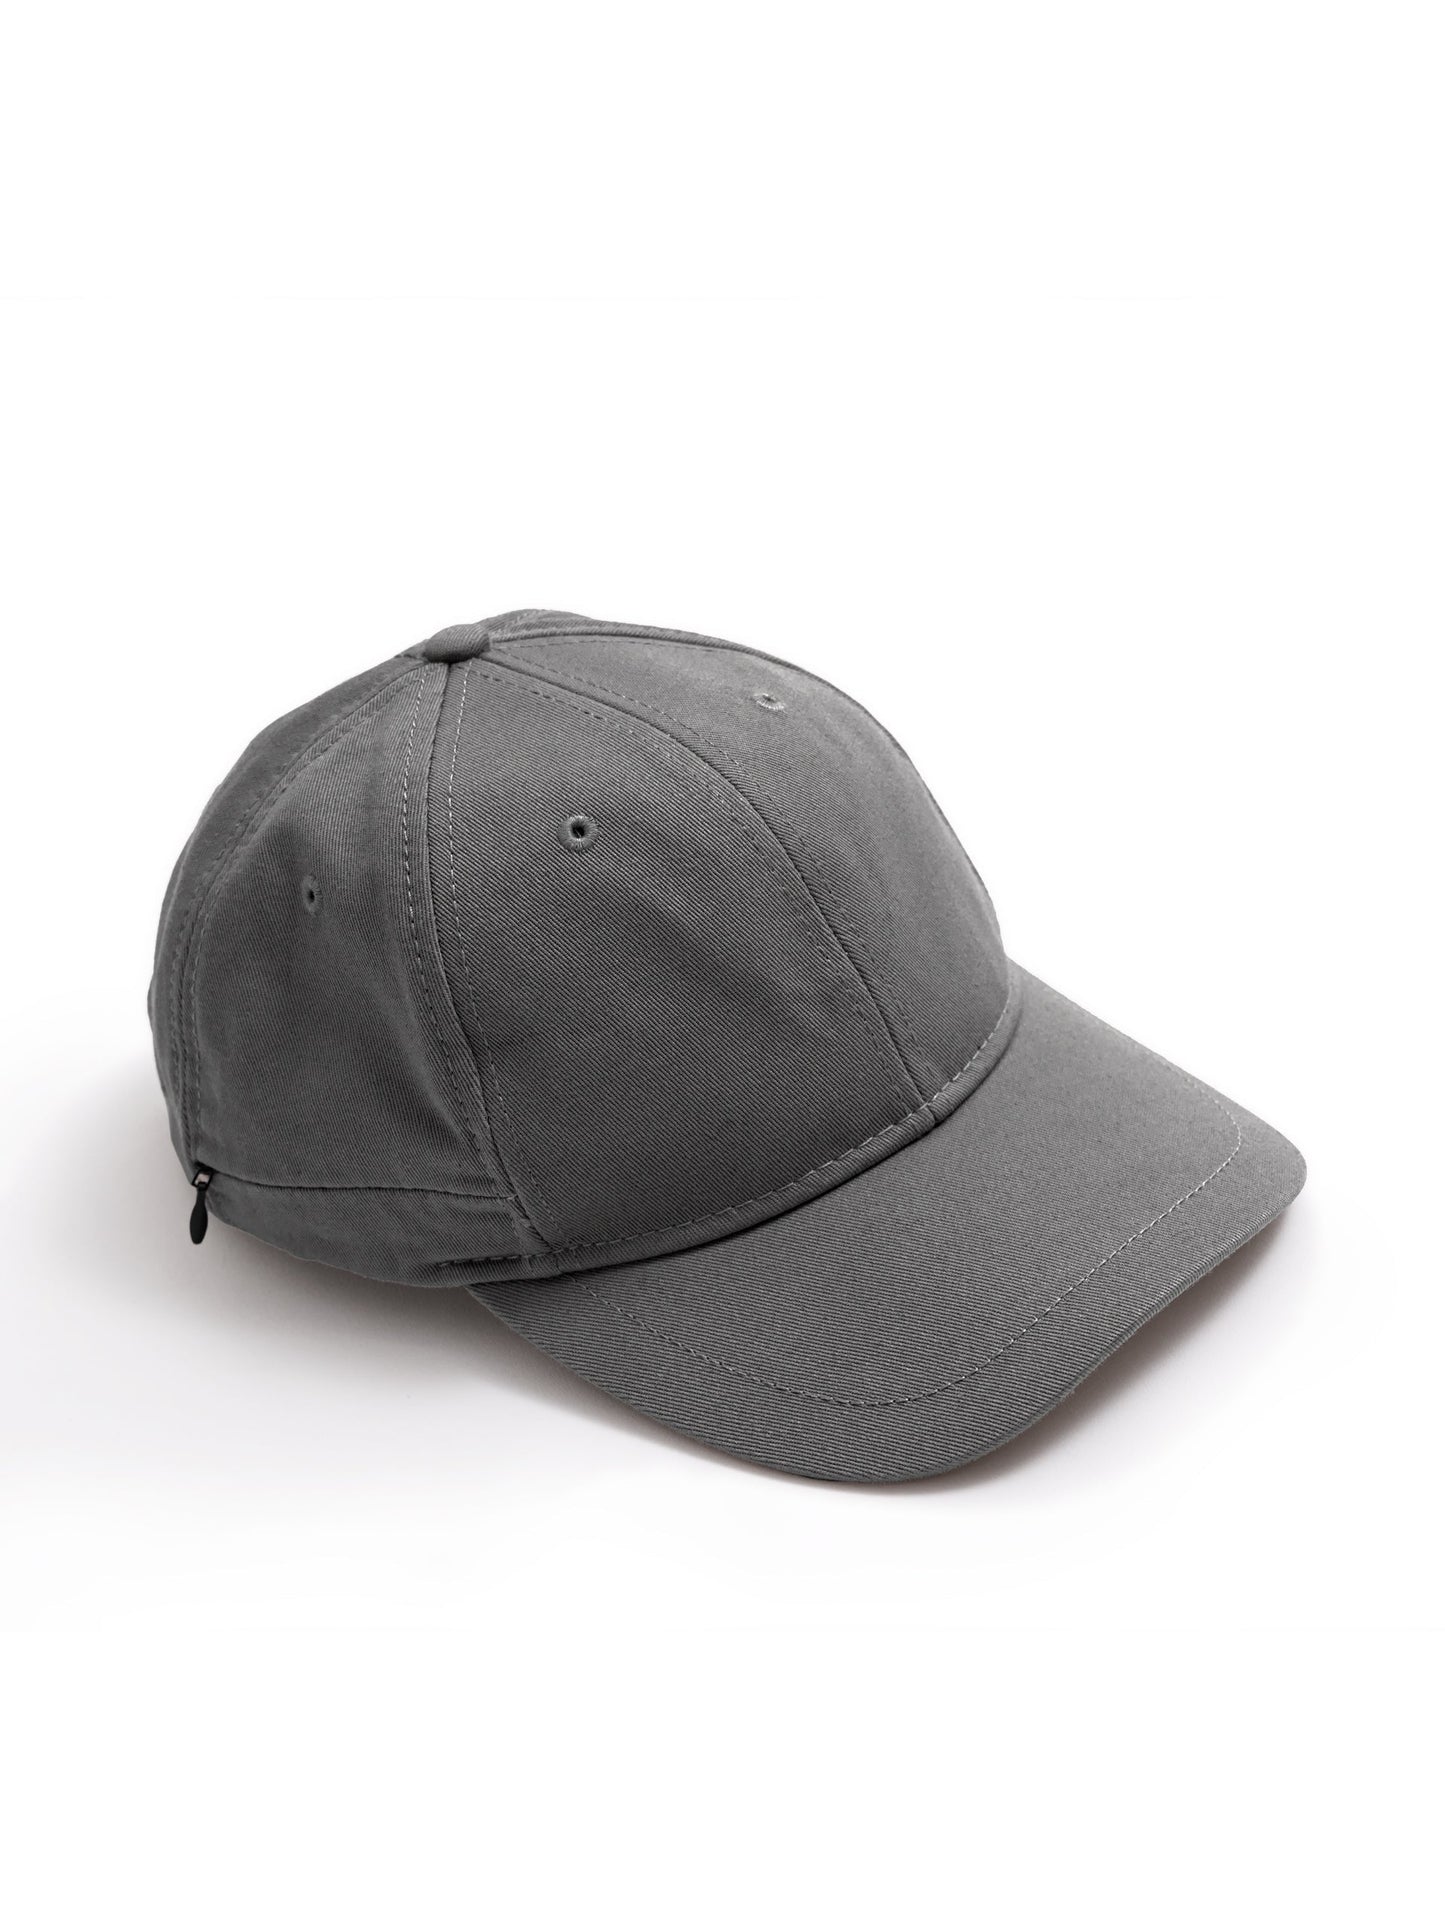 Unisex TEC Hat with Hidden Pockets | SCOTTeVEST